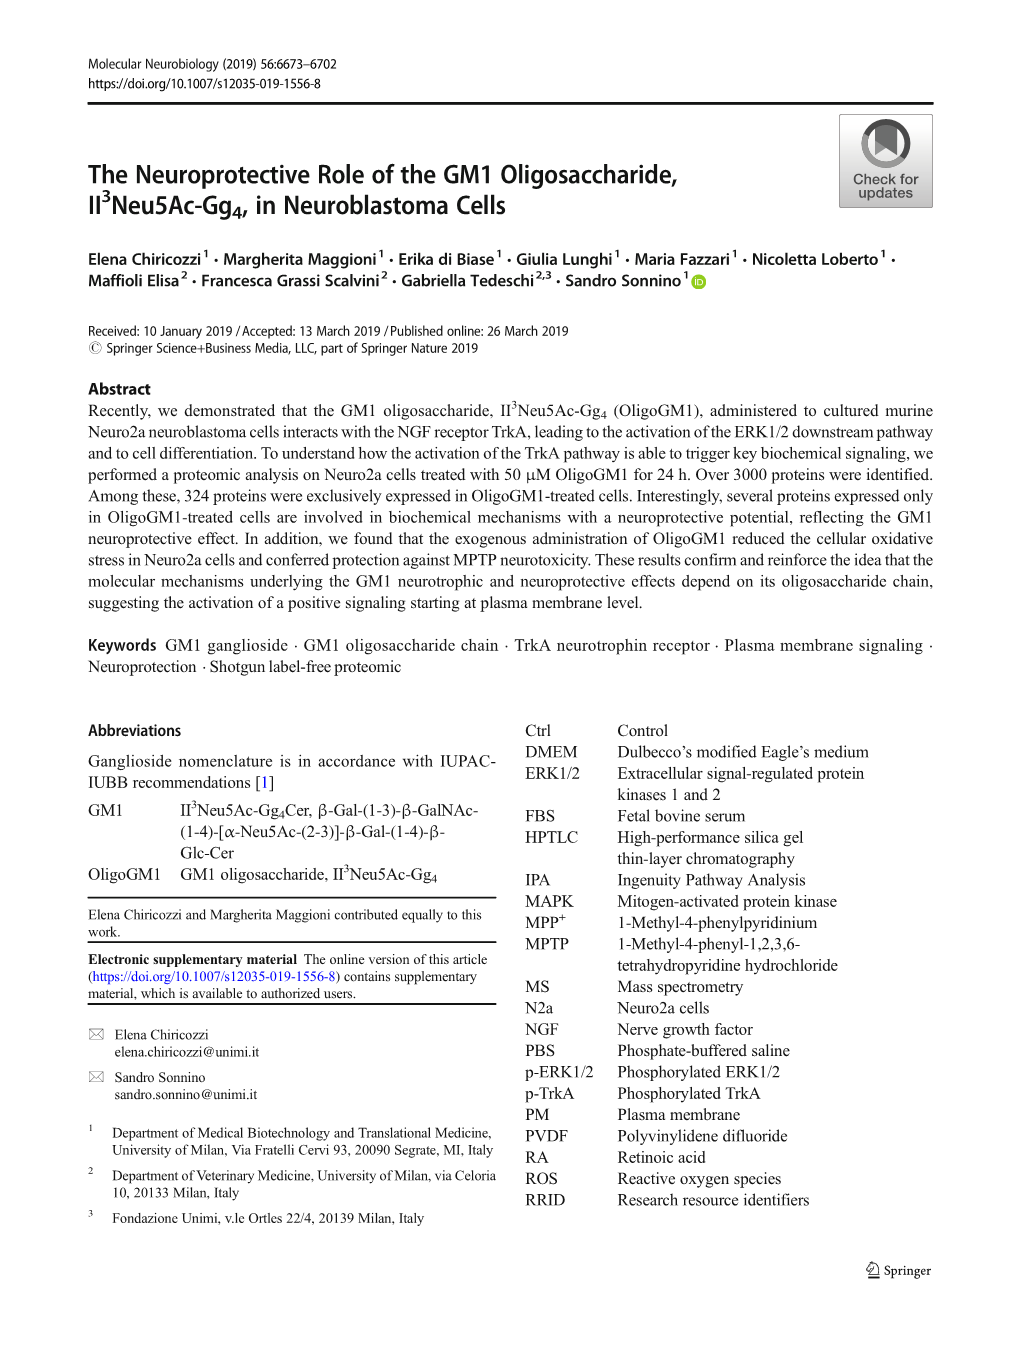 The Neuroprotective Role of the GM1 Oligosaccharide, Ii3neu5ac-Gg4, In